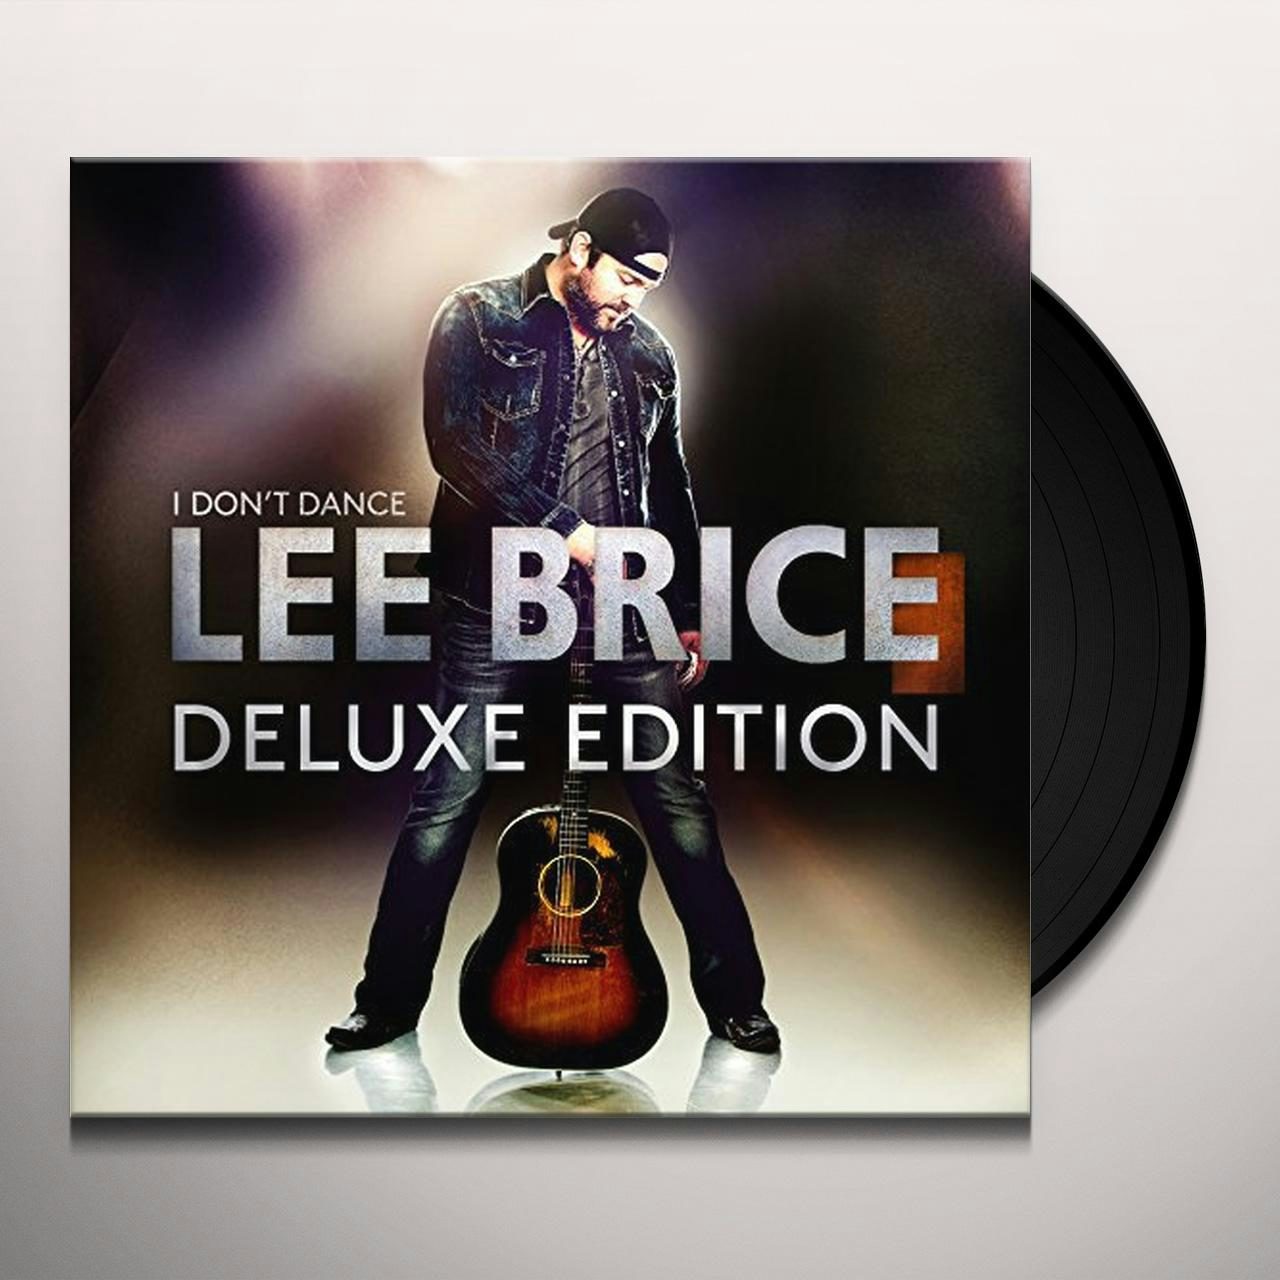 I DON'T DANCE Vinyl Record - Lee Brice